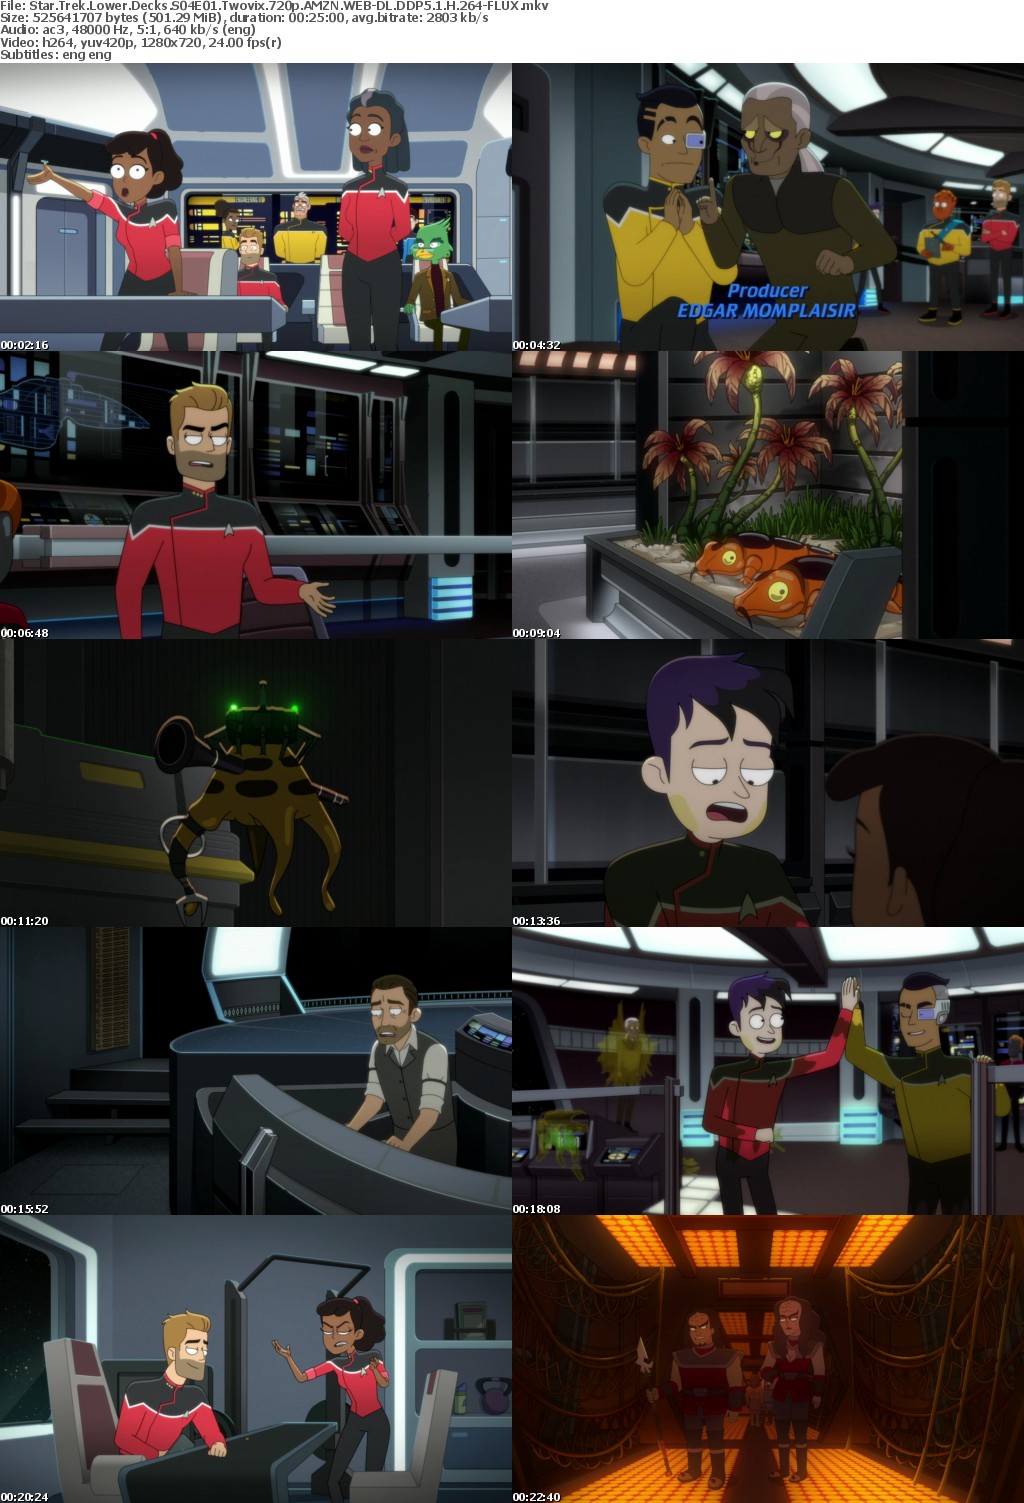 Star Trek Lower Decks S04E01 Twovix 720p AMZN WEB-DL DDP5 1 H 264-FLUX